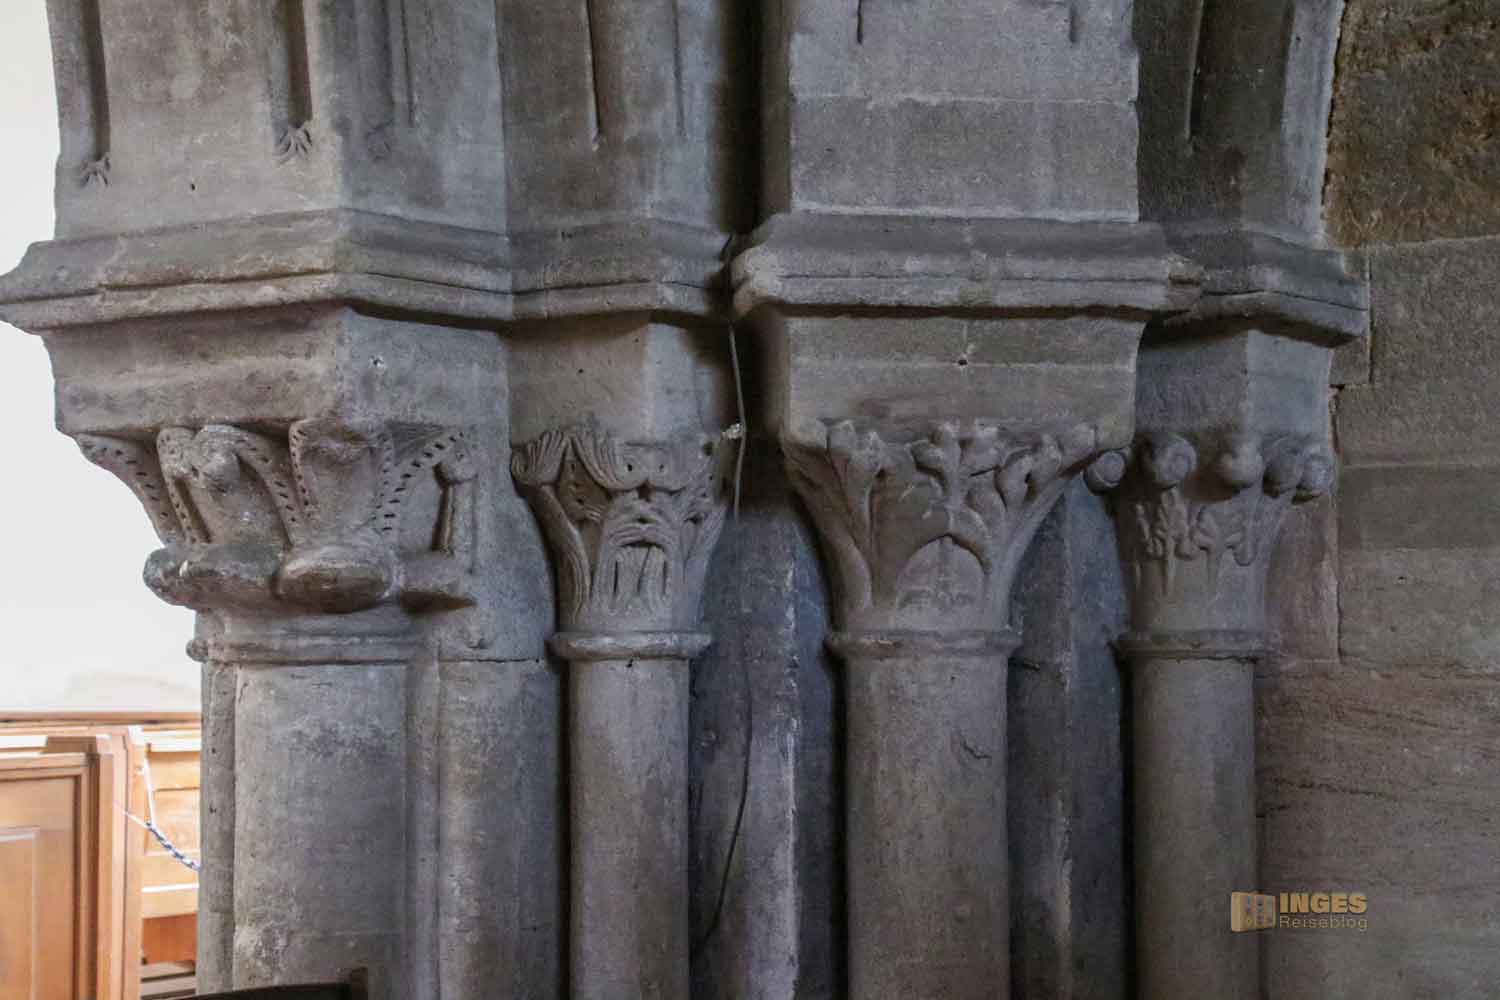 Säulen in der Stiftskirche Faurndau 0651